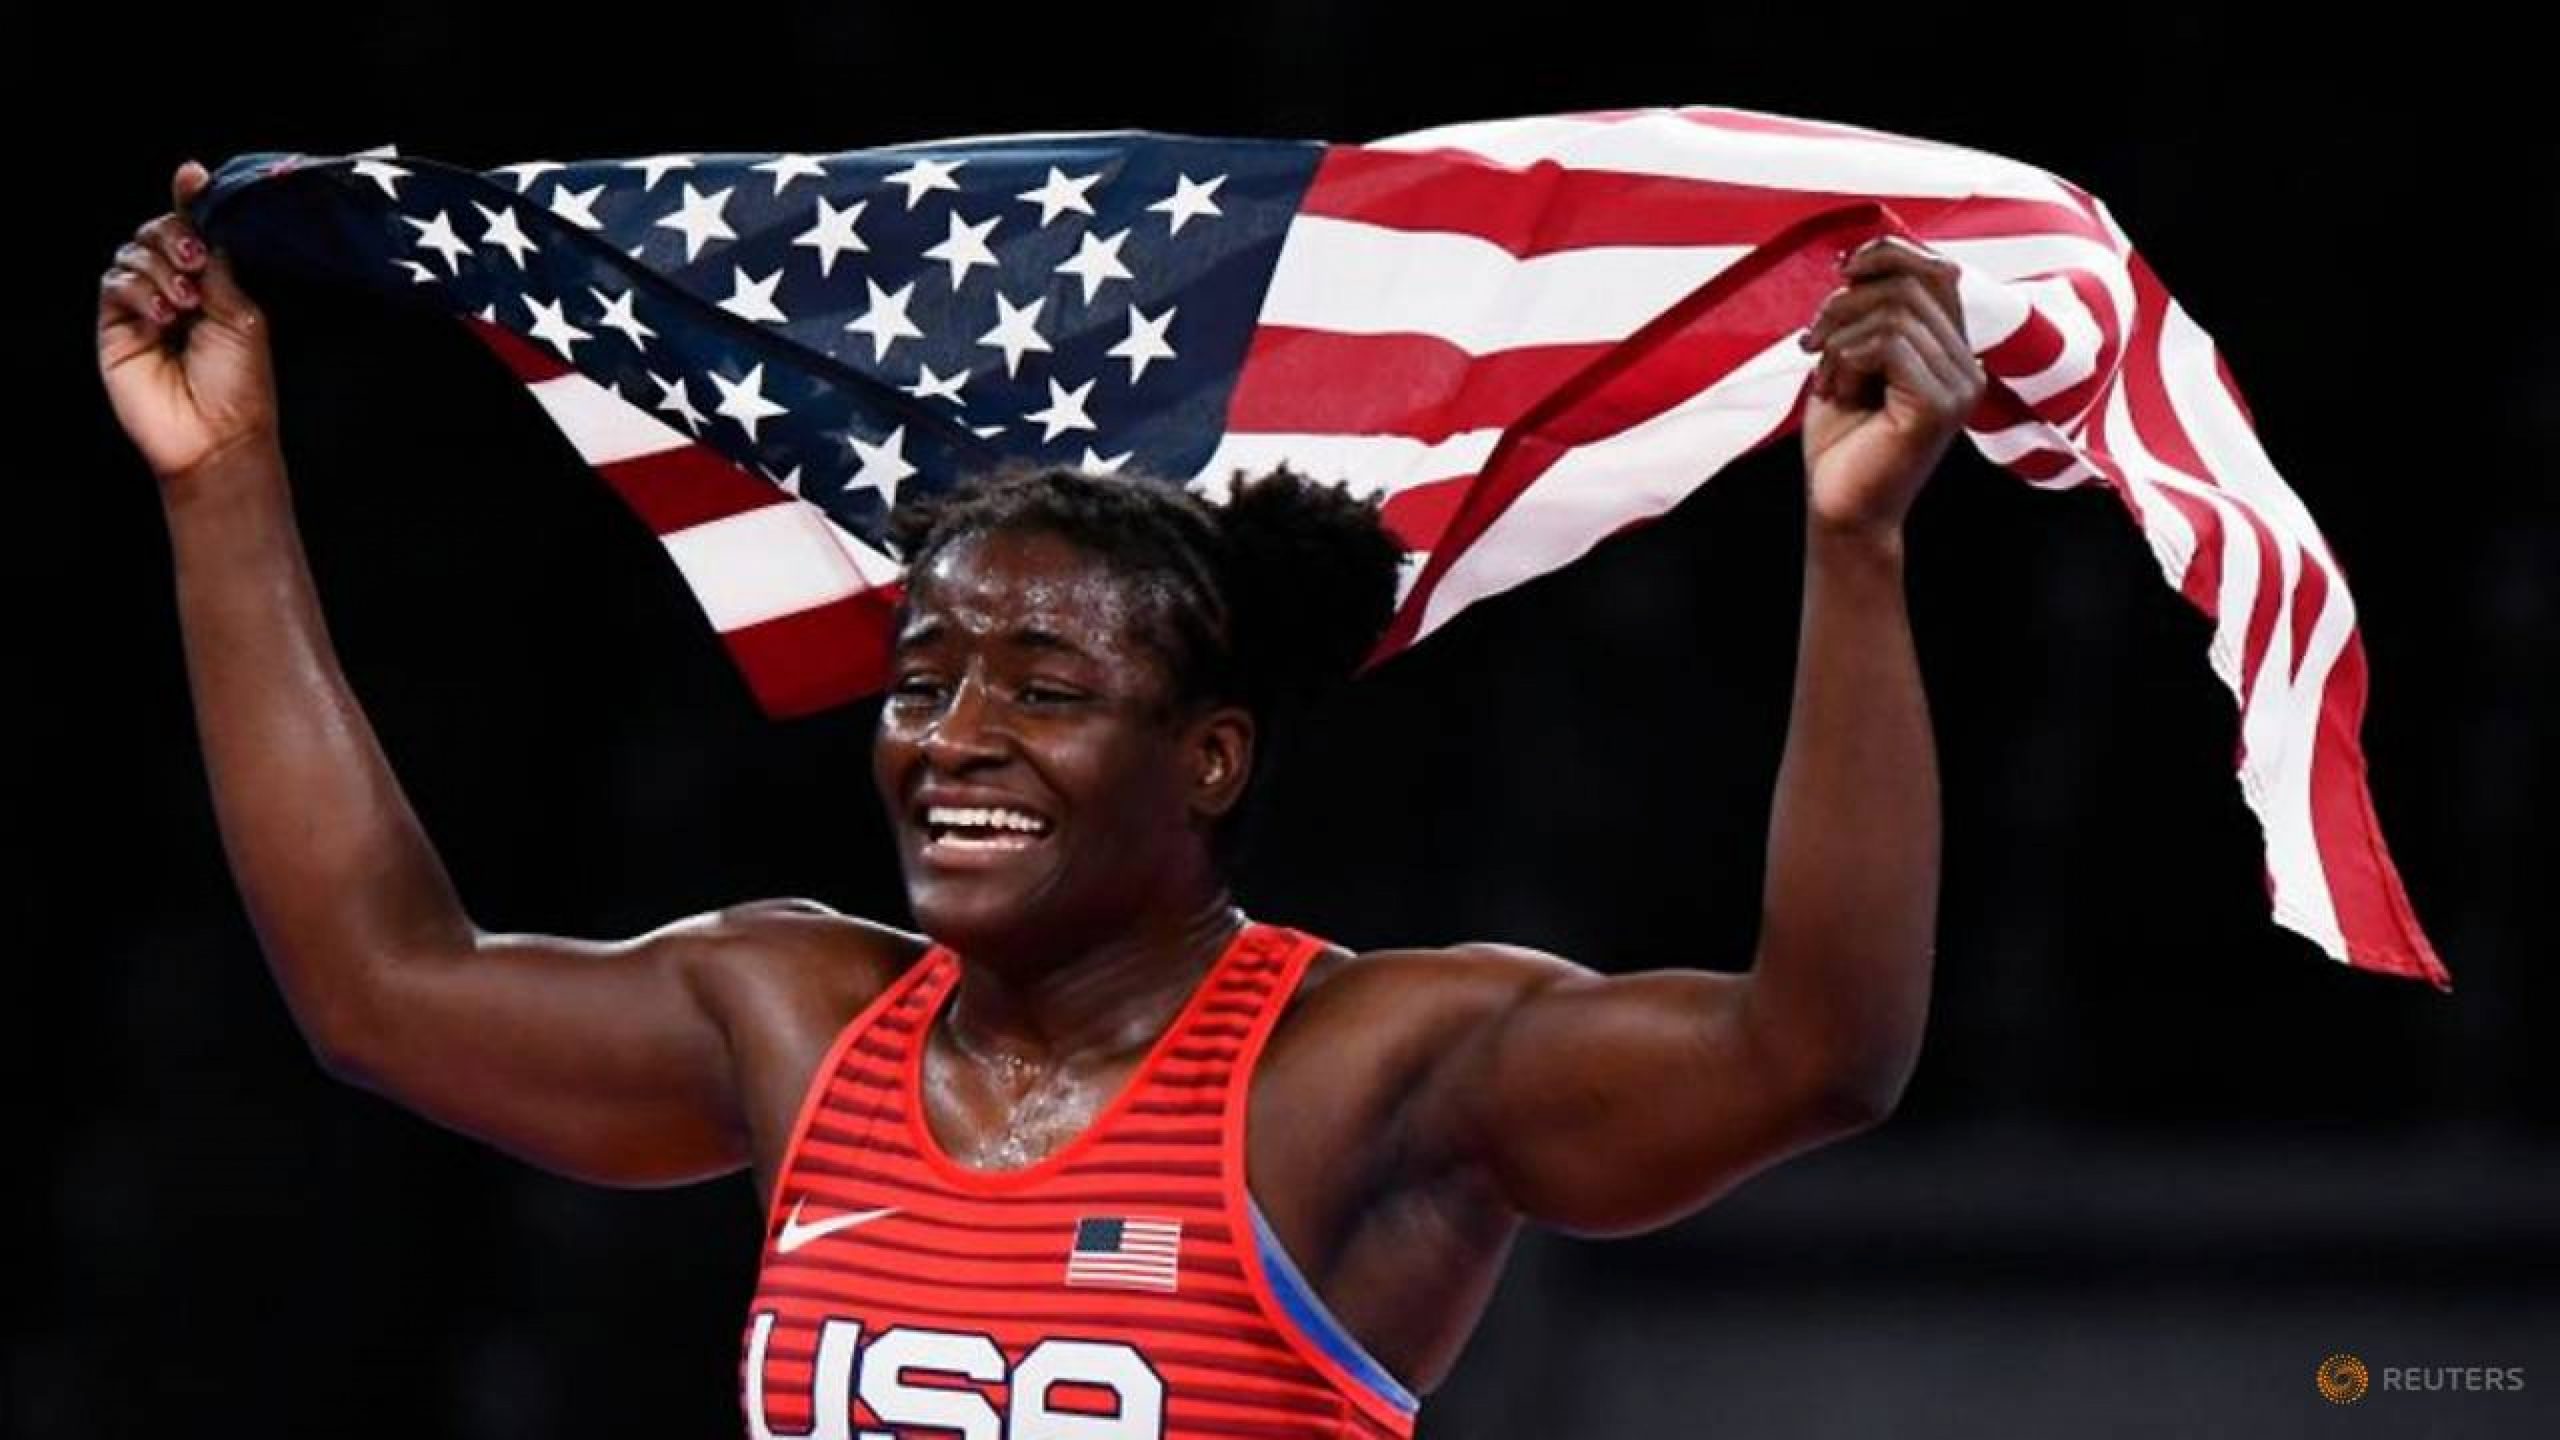 Olympics-Wrestling-Mensah-Stock wins women’s freestyle light heavyweight gold medal